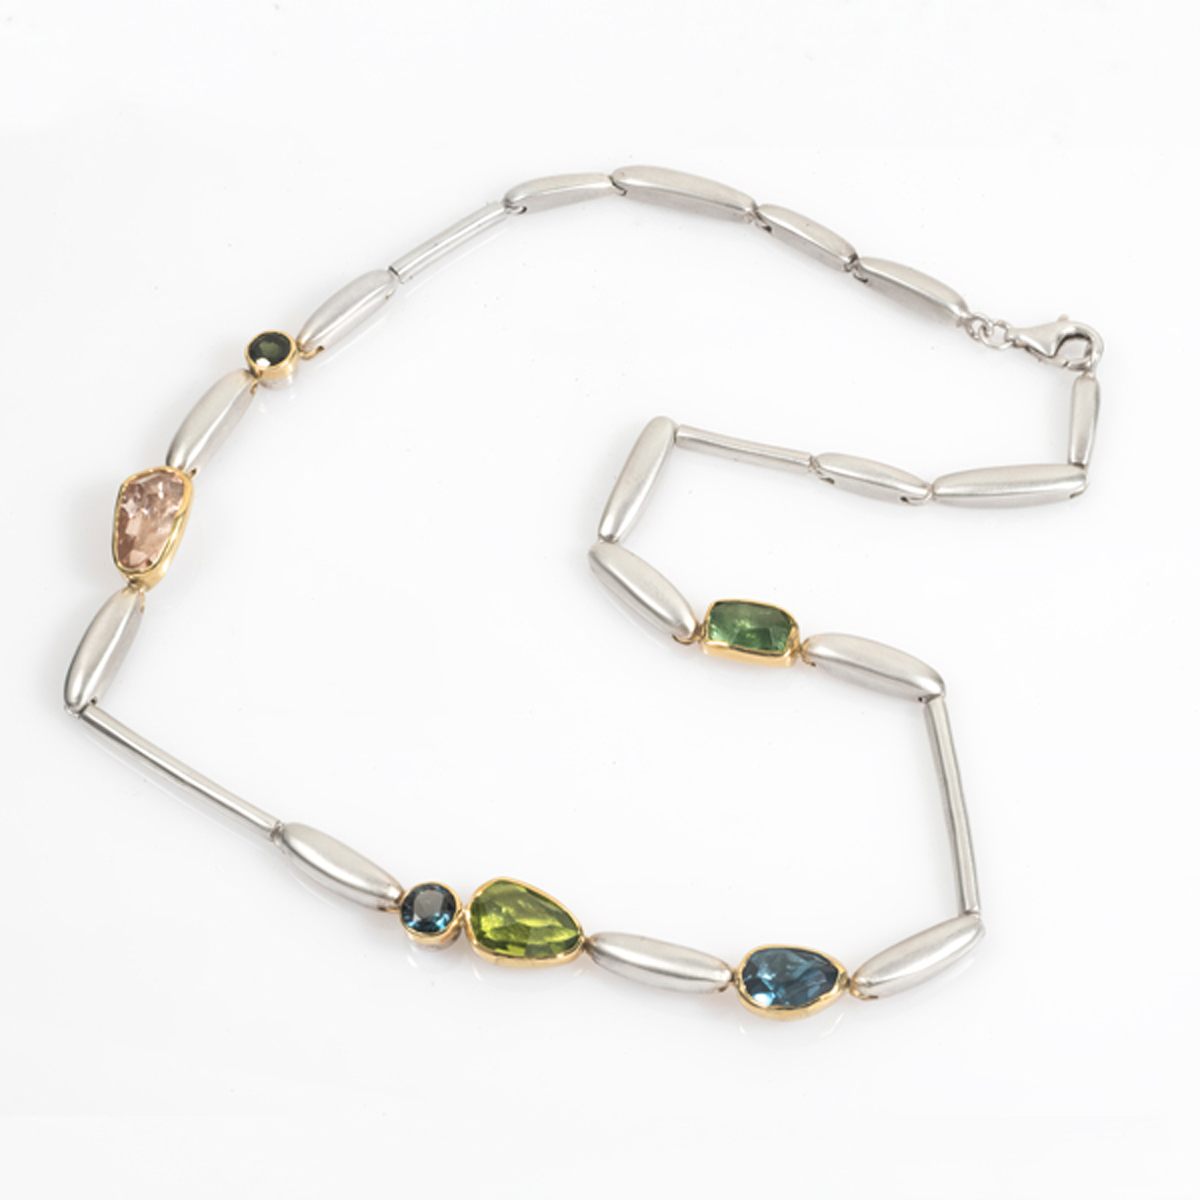 Green Tourmaline, Morganite, Blue Topaz, Aquamarine, Gold & Silver necklace